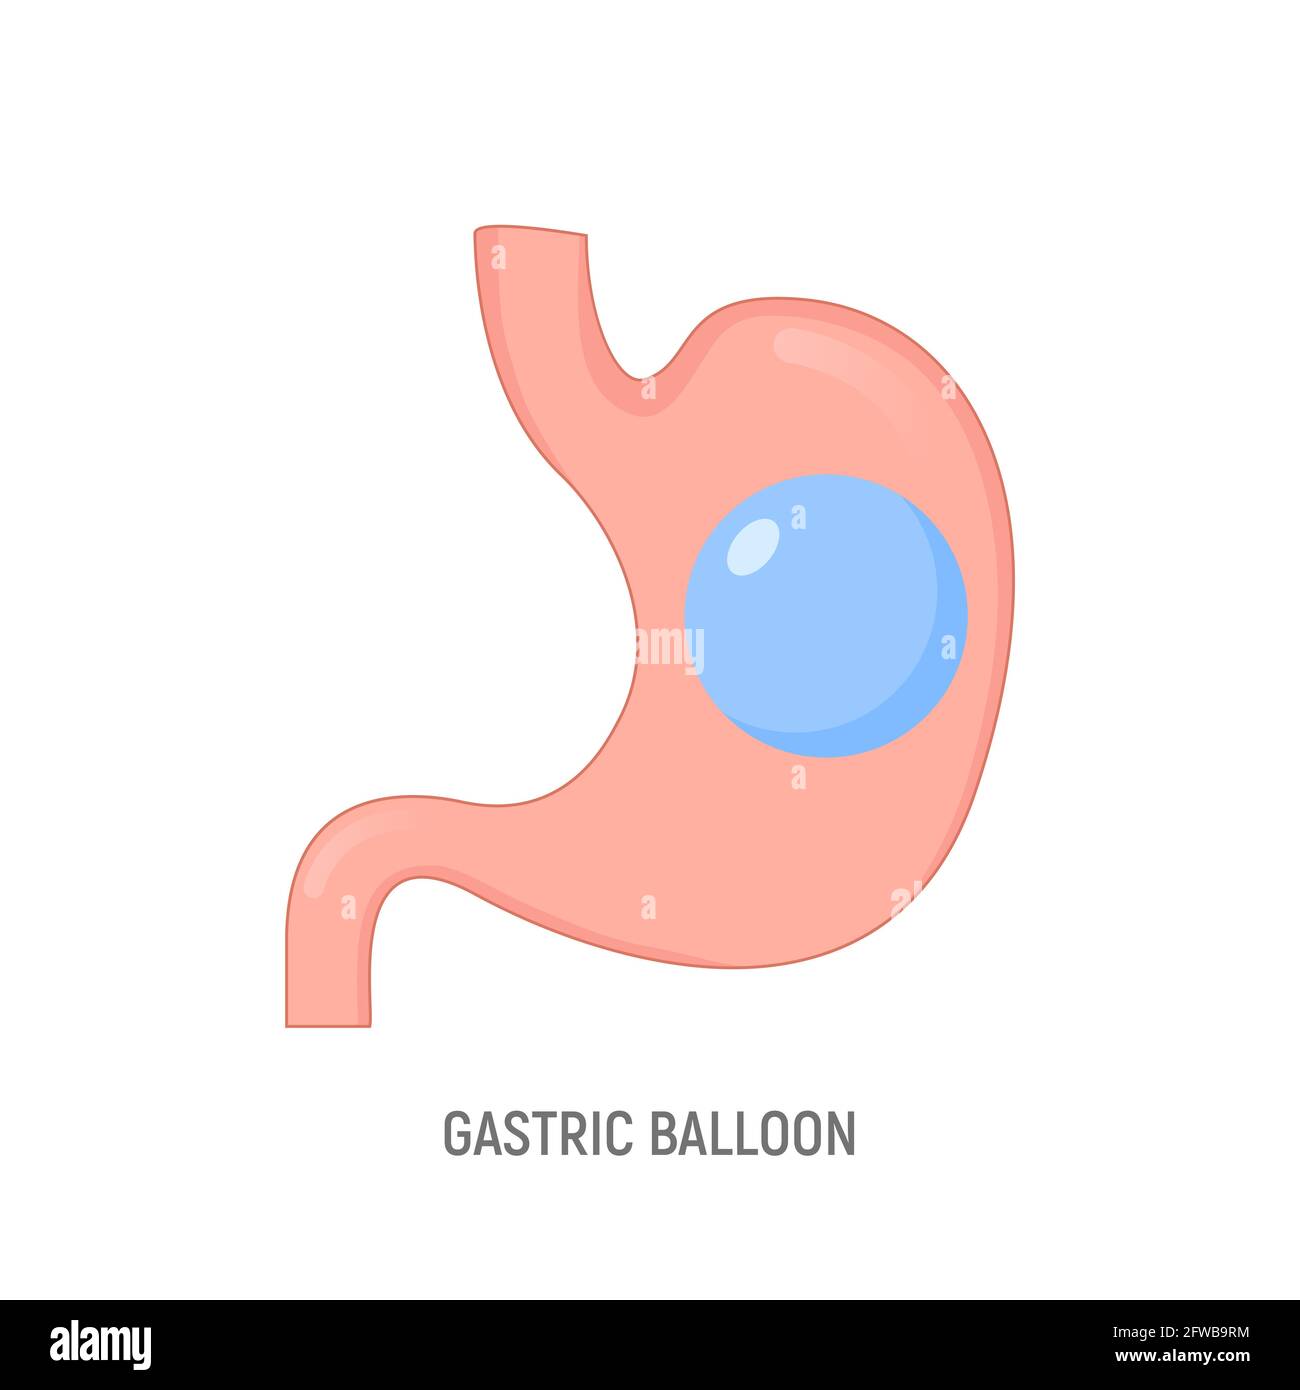 Balloon gastric Gastric Balloon,